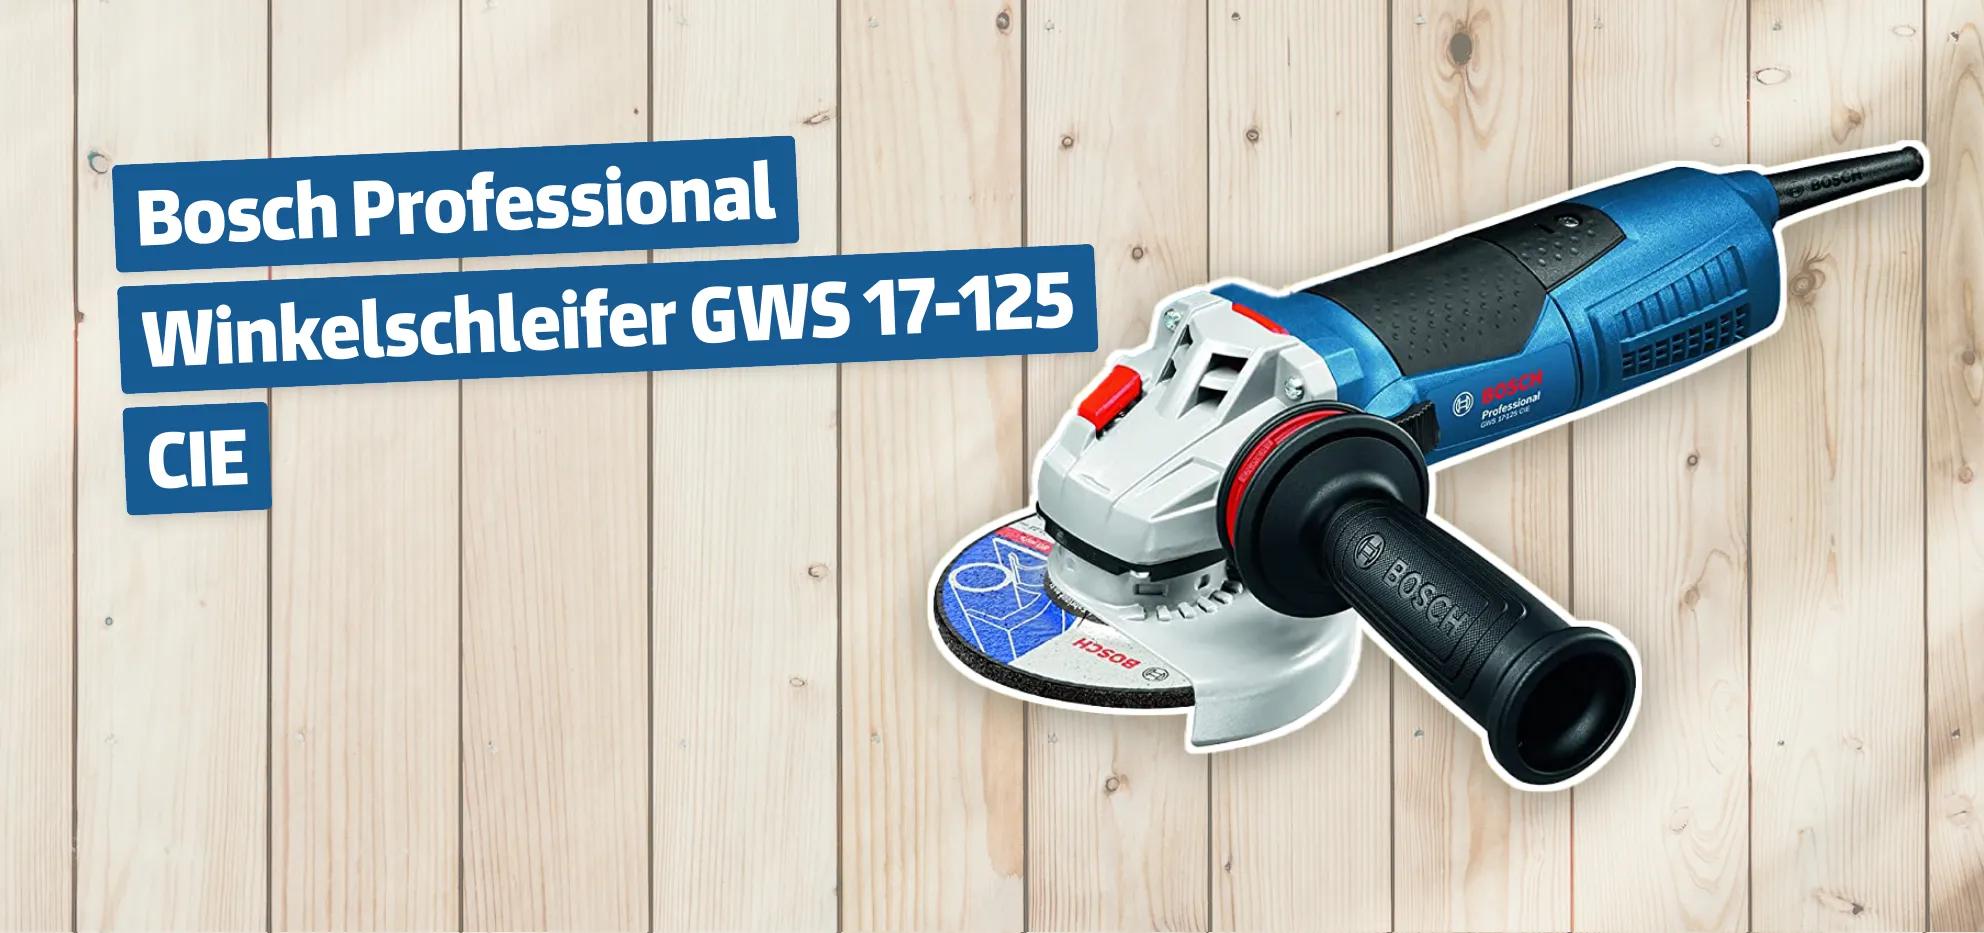 Bosch Professional Winkelschleifer GWS 17-125 CIE